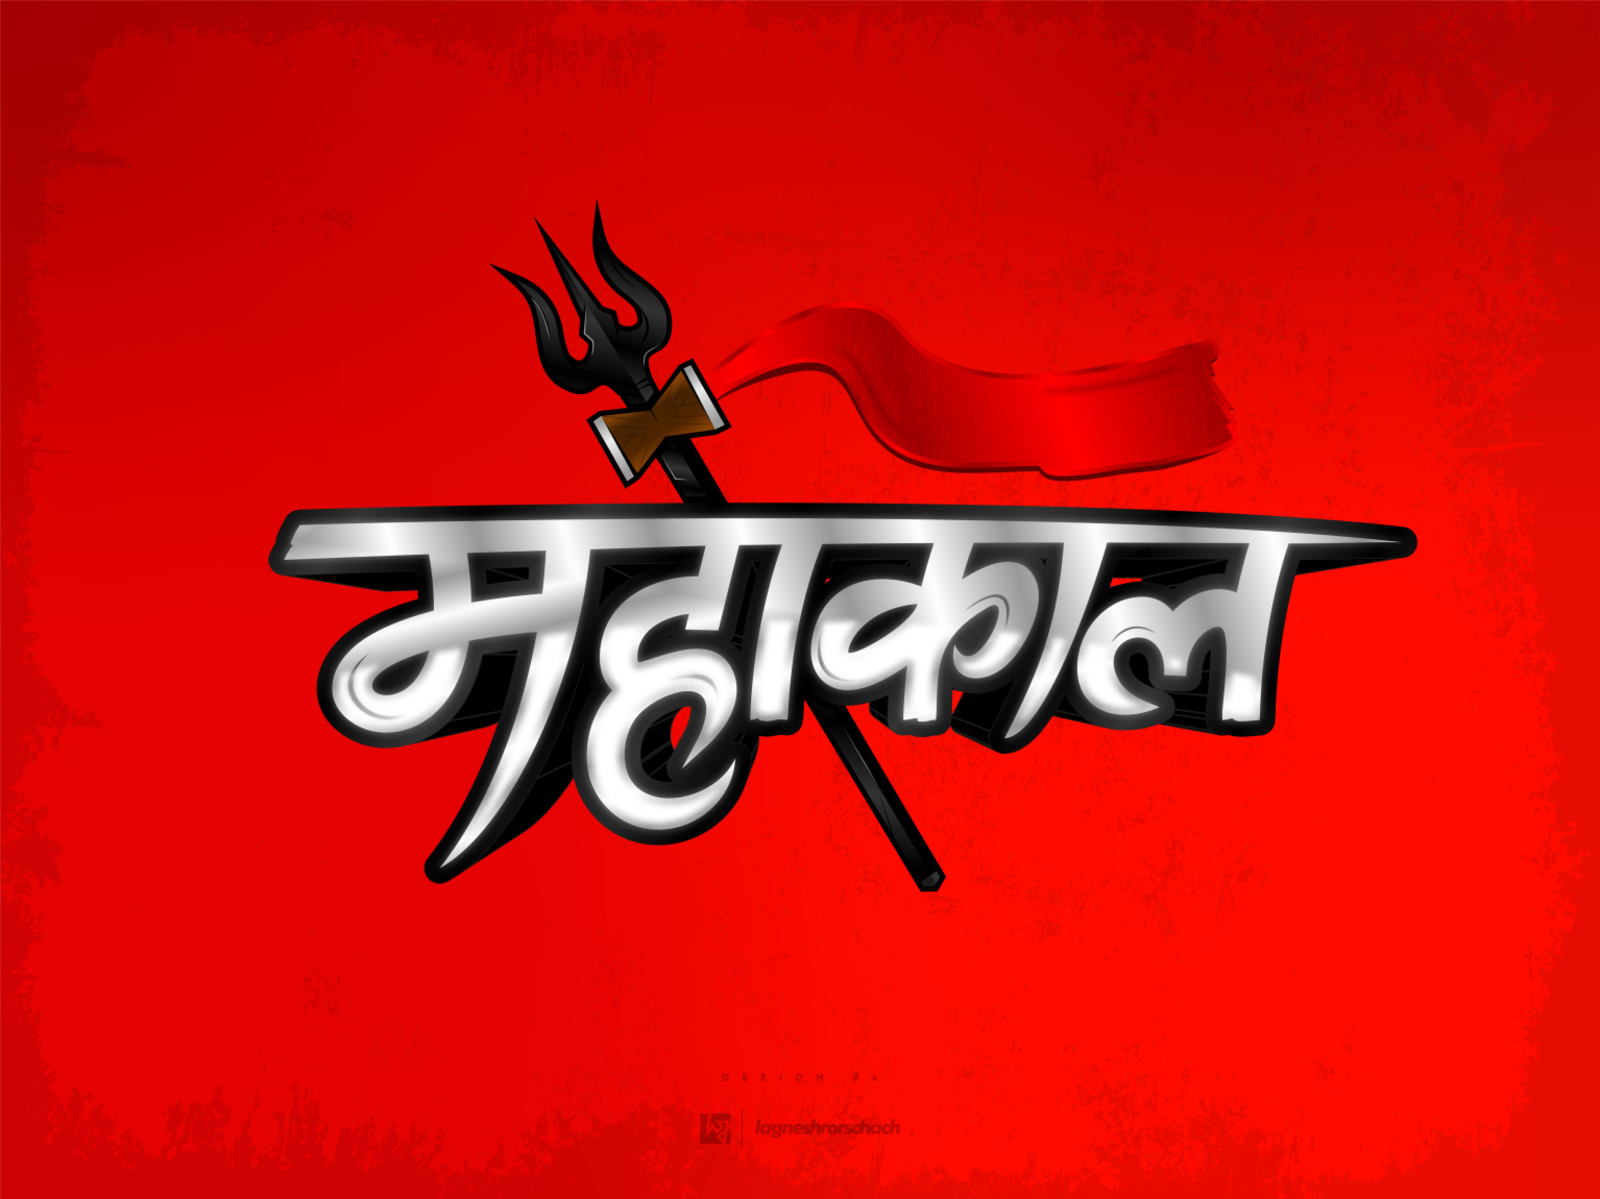 Mahakal logo image redbubble